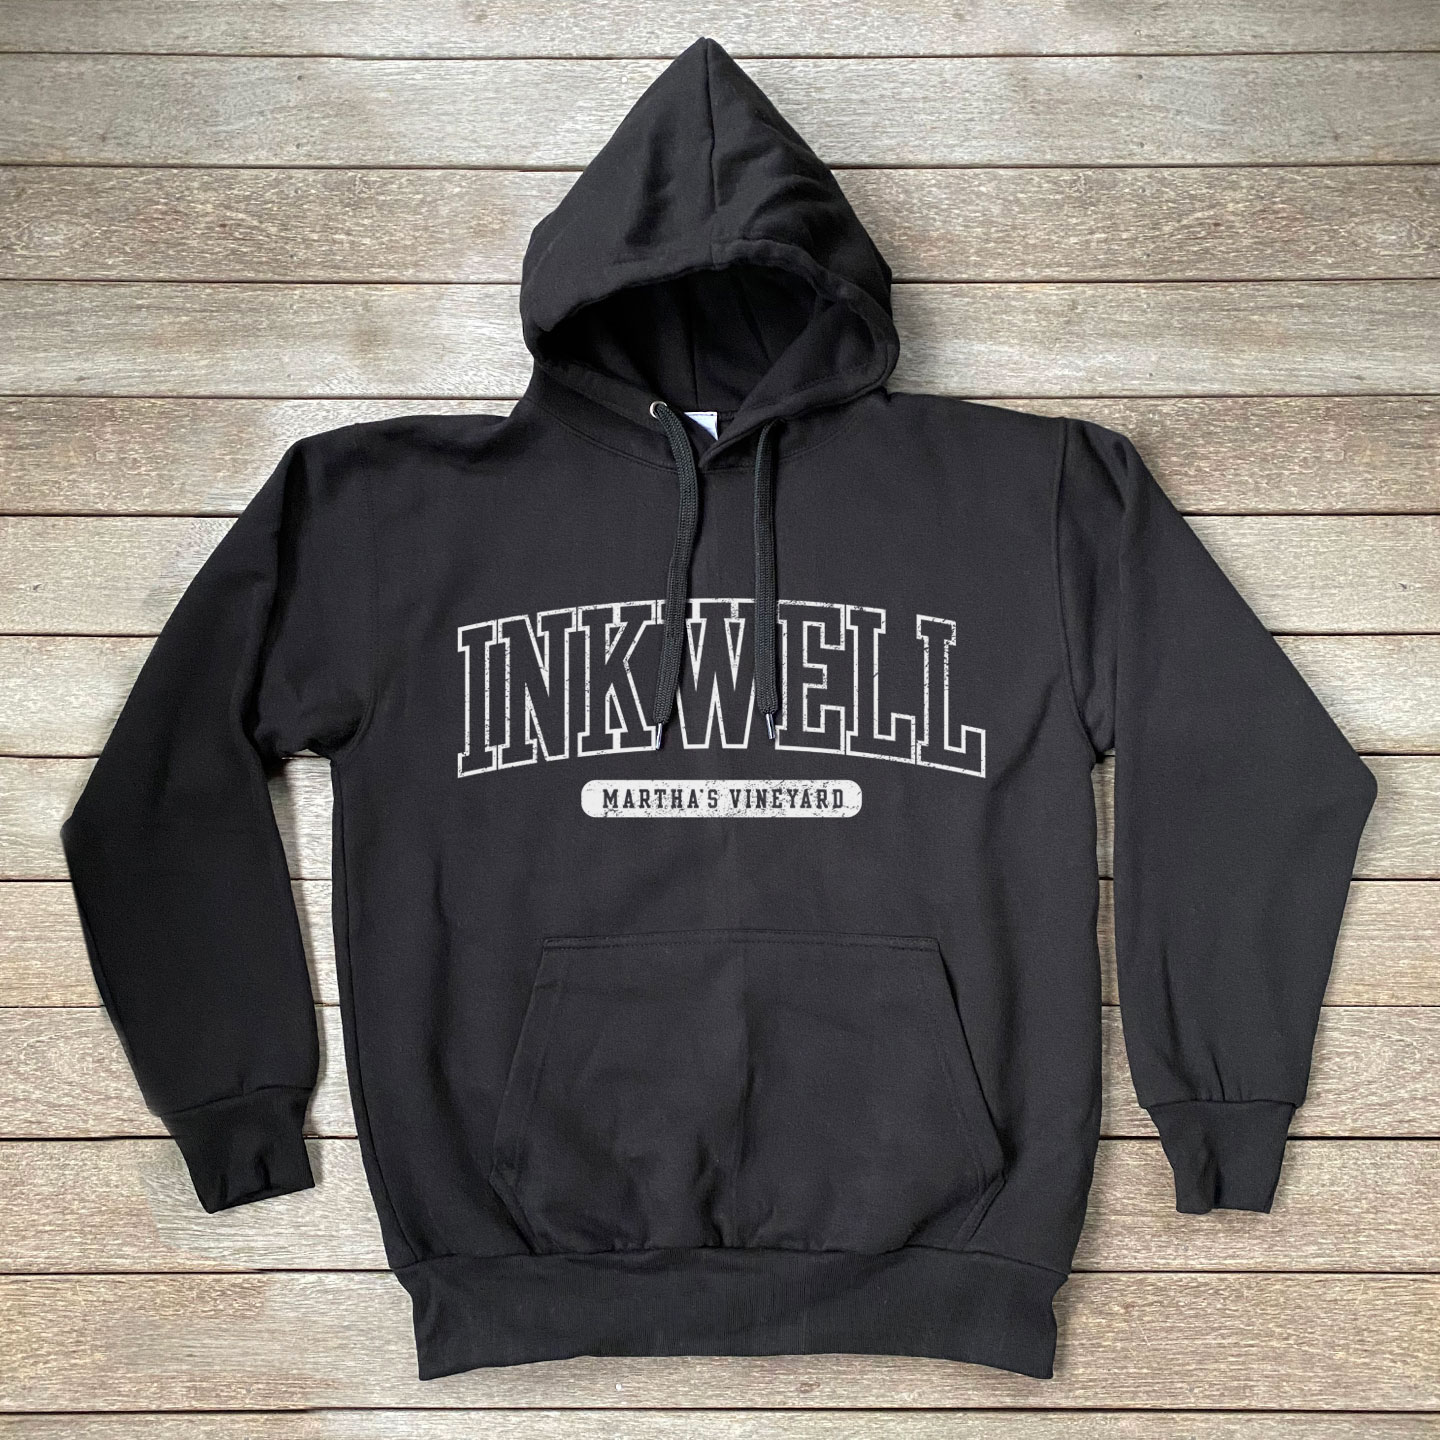 INKWELL MV – Inkwell Clothing Company